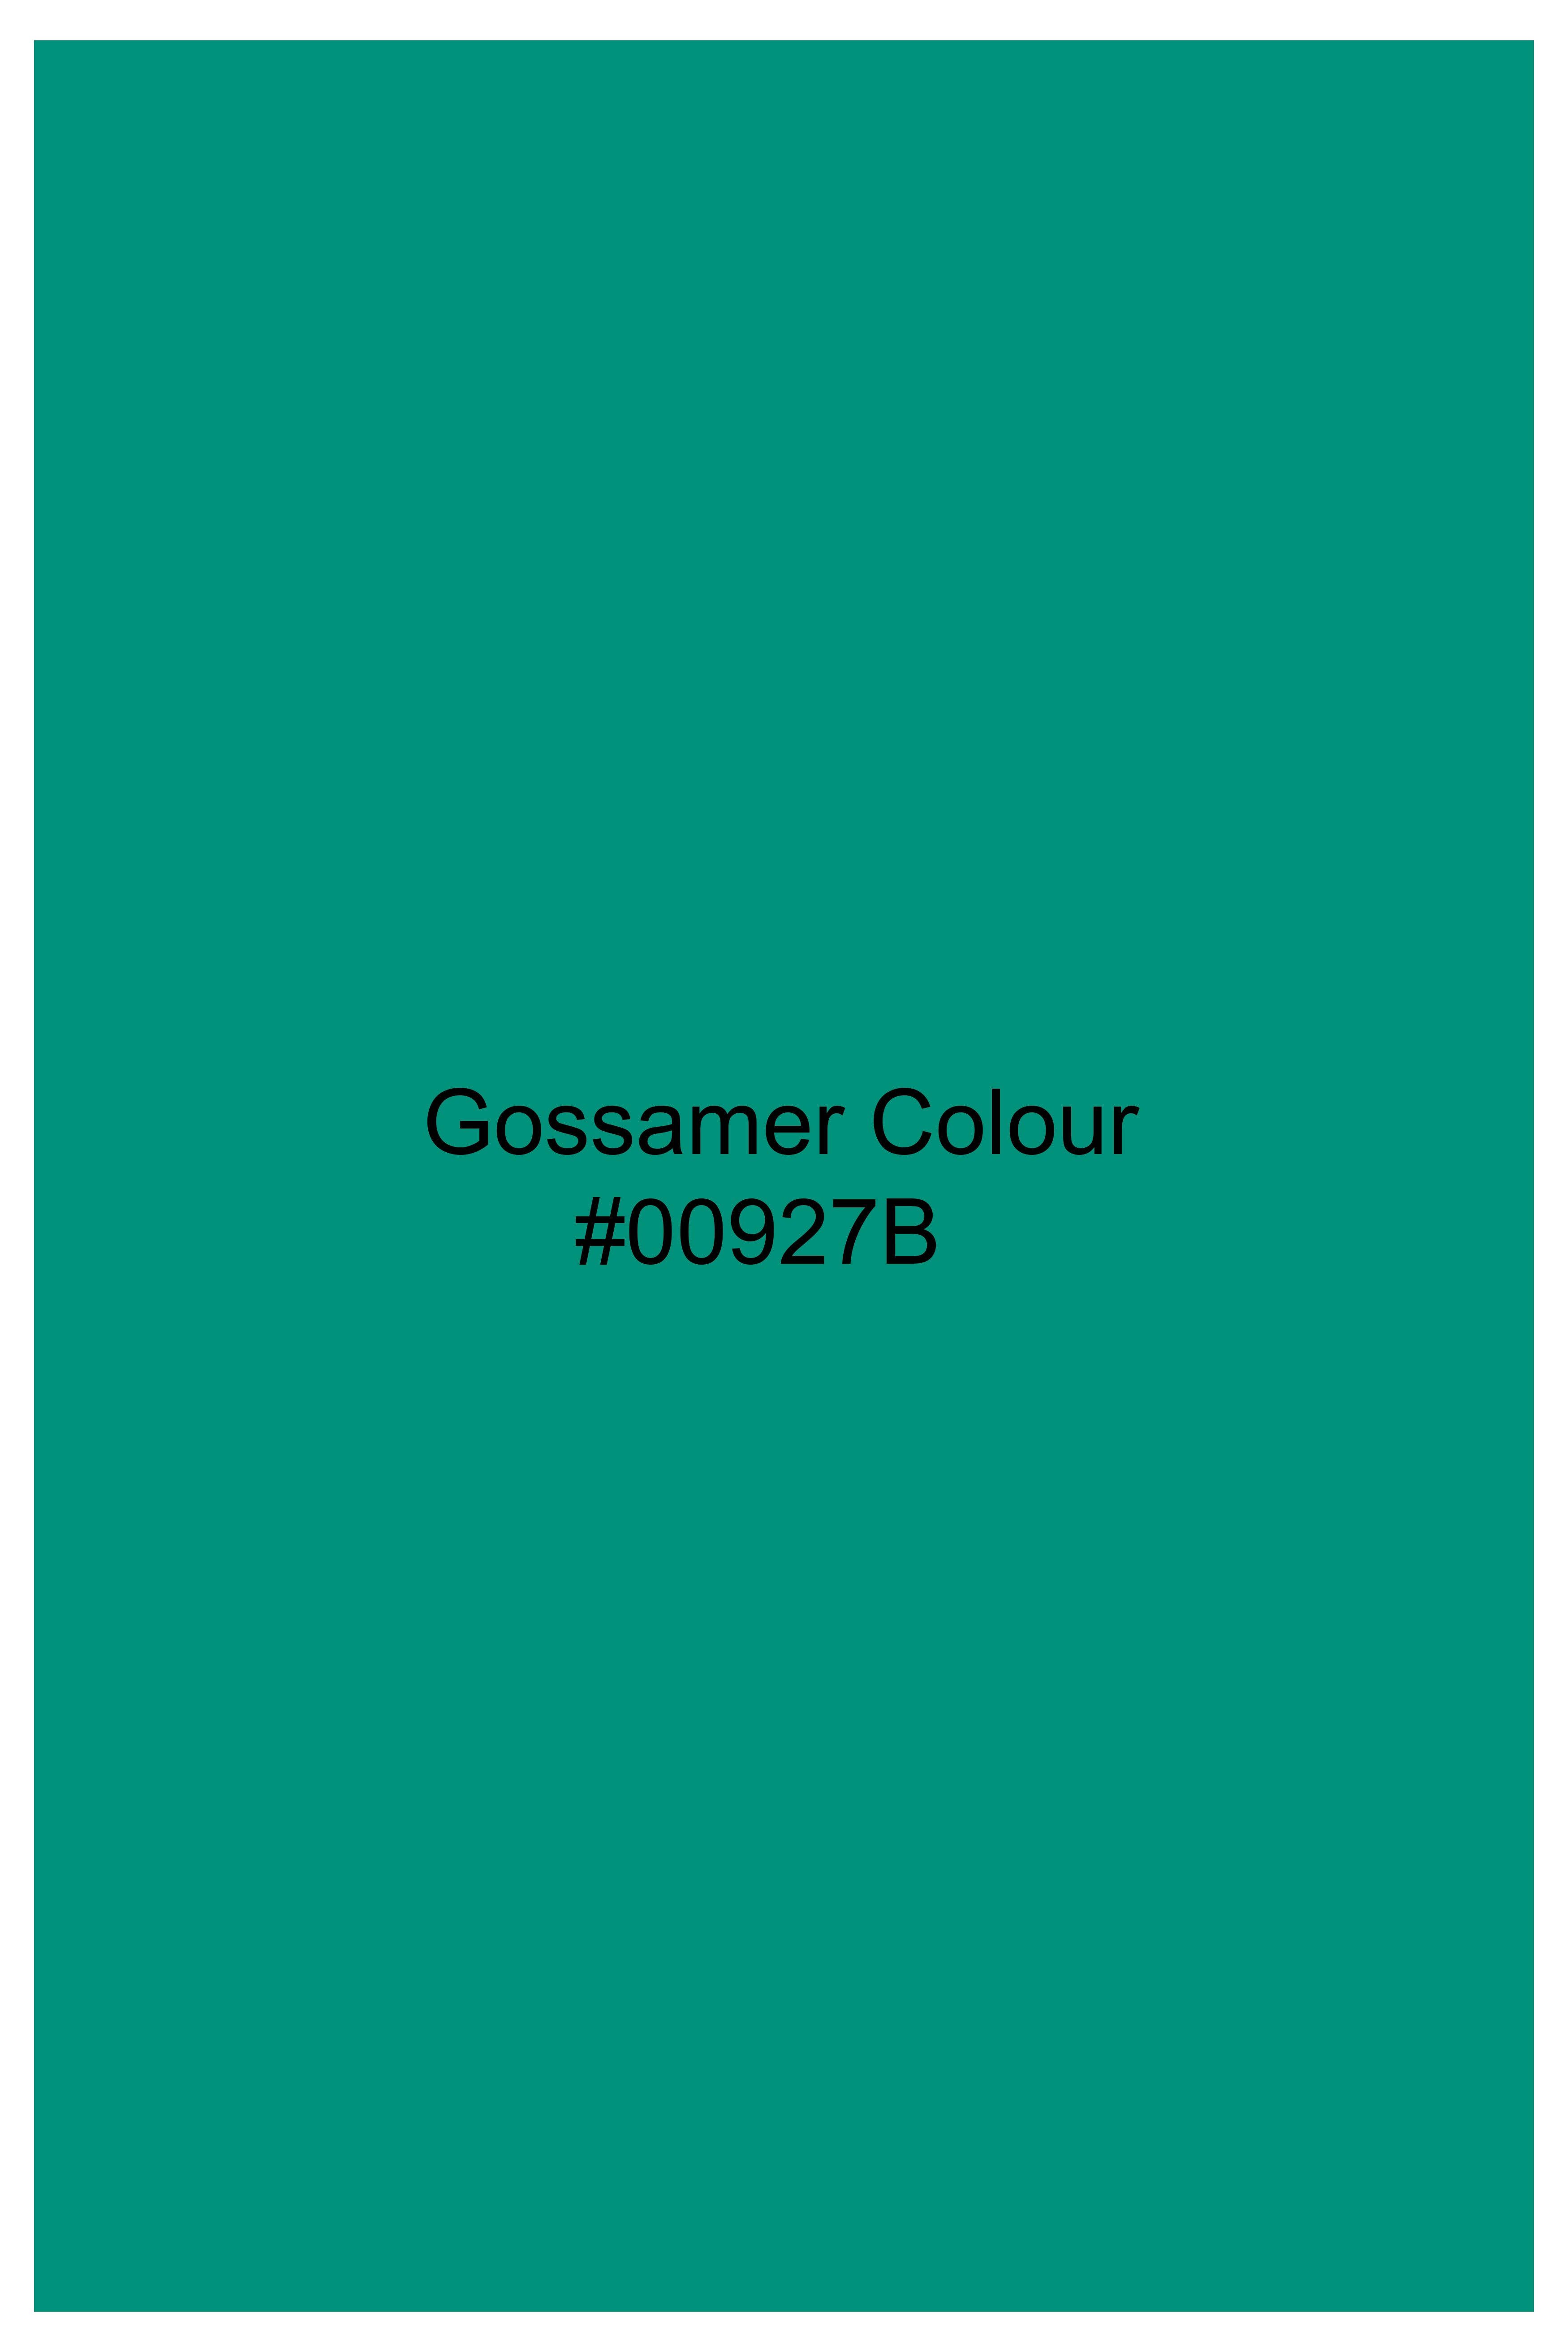 Gossamer Green Hand Painted Premium Cotton T-shirt TS005-W016-ART-S, TS005-W016-ART-M, TS005-W016-ART-L, TS005-W016-ART-XL, TS005-W016-ART-XXL